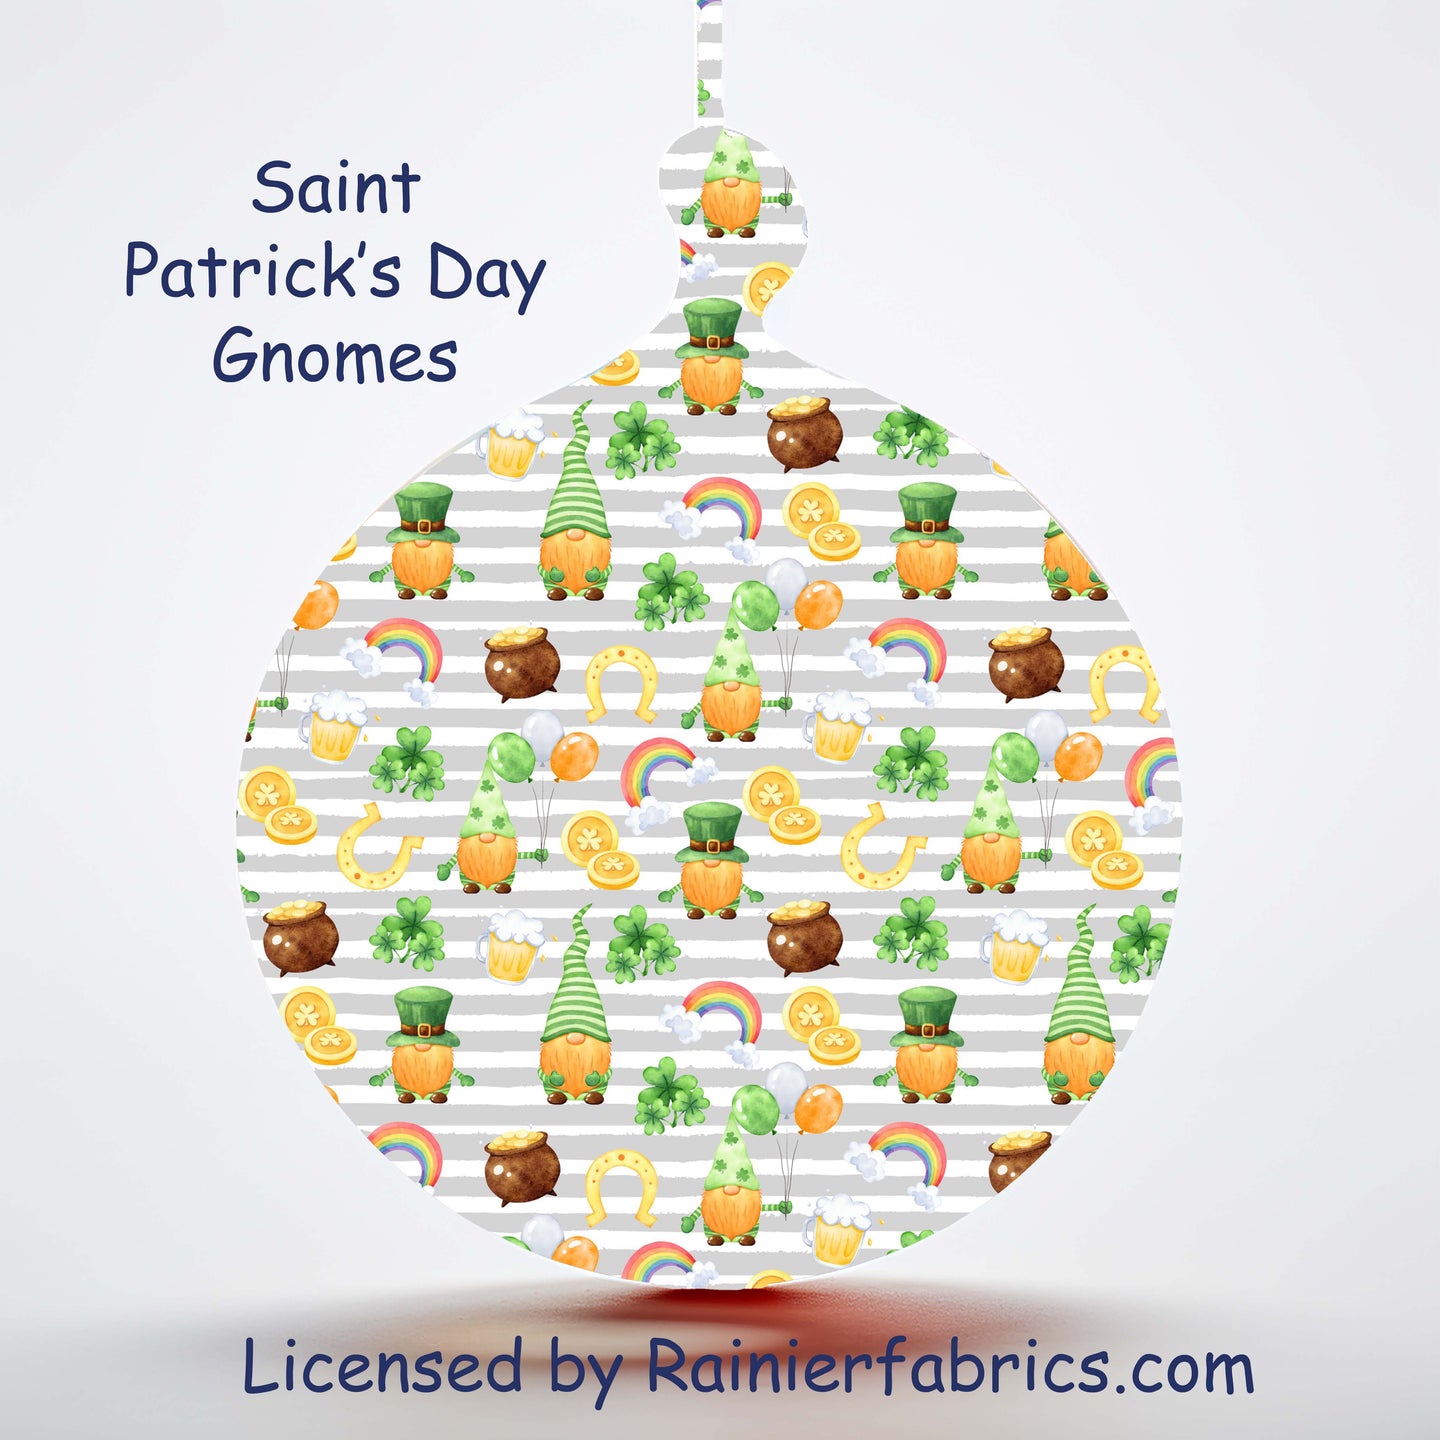 Saint Patrick's Day Gnomes